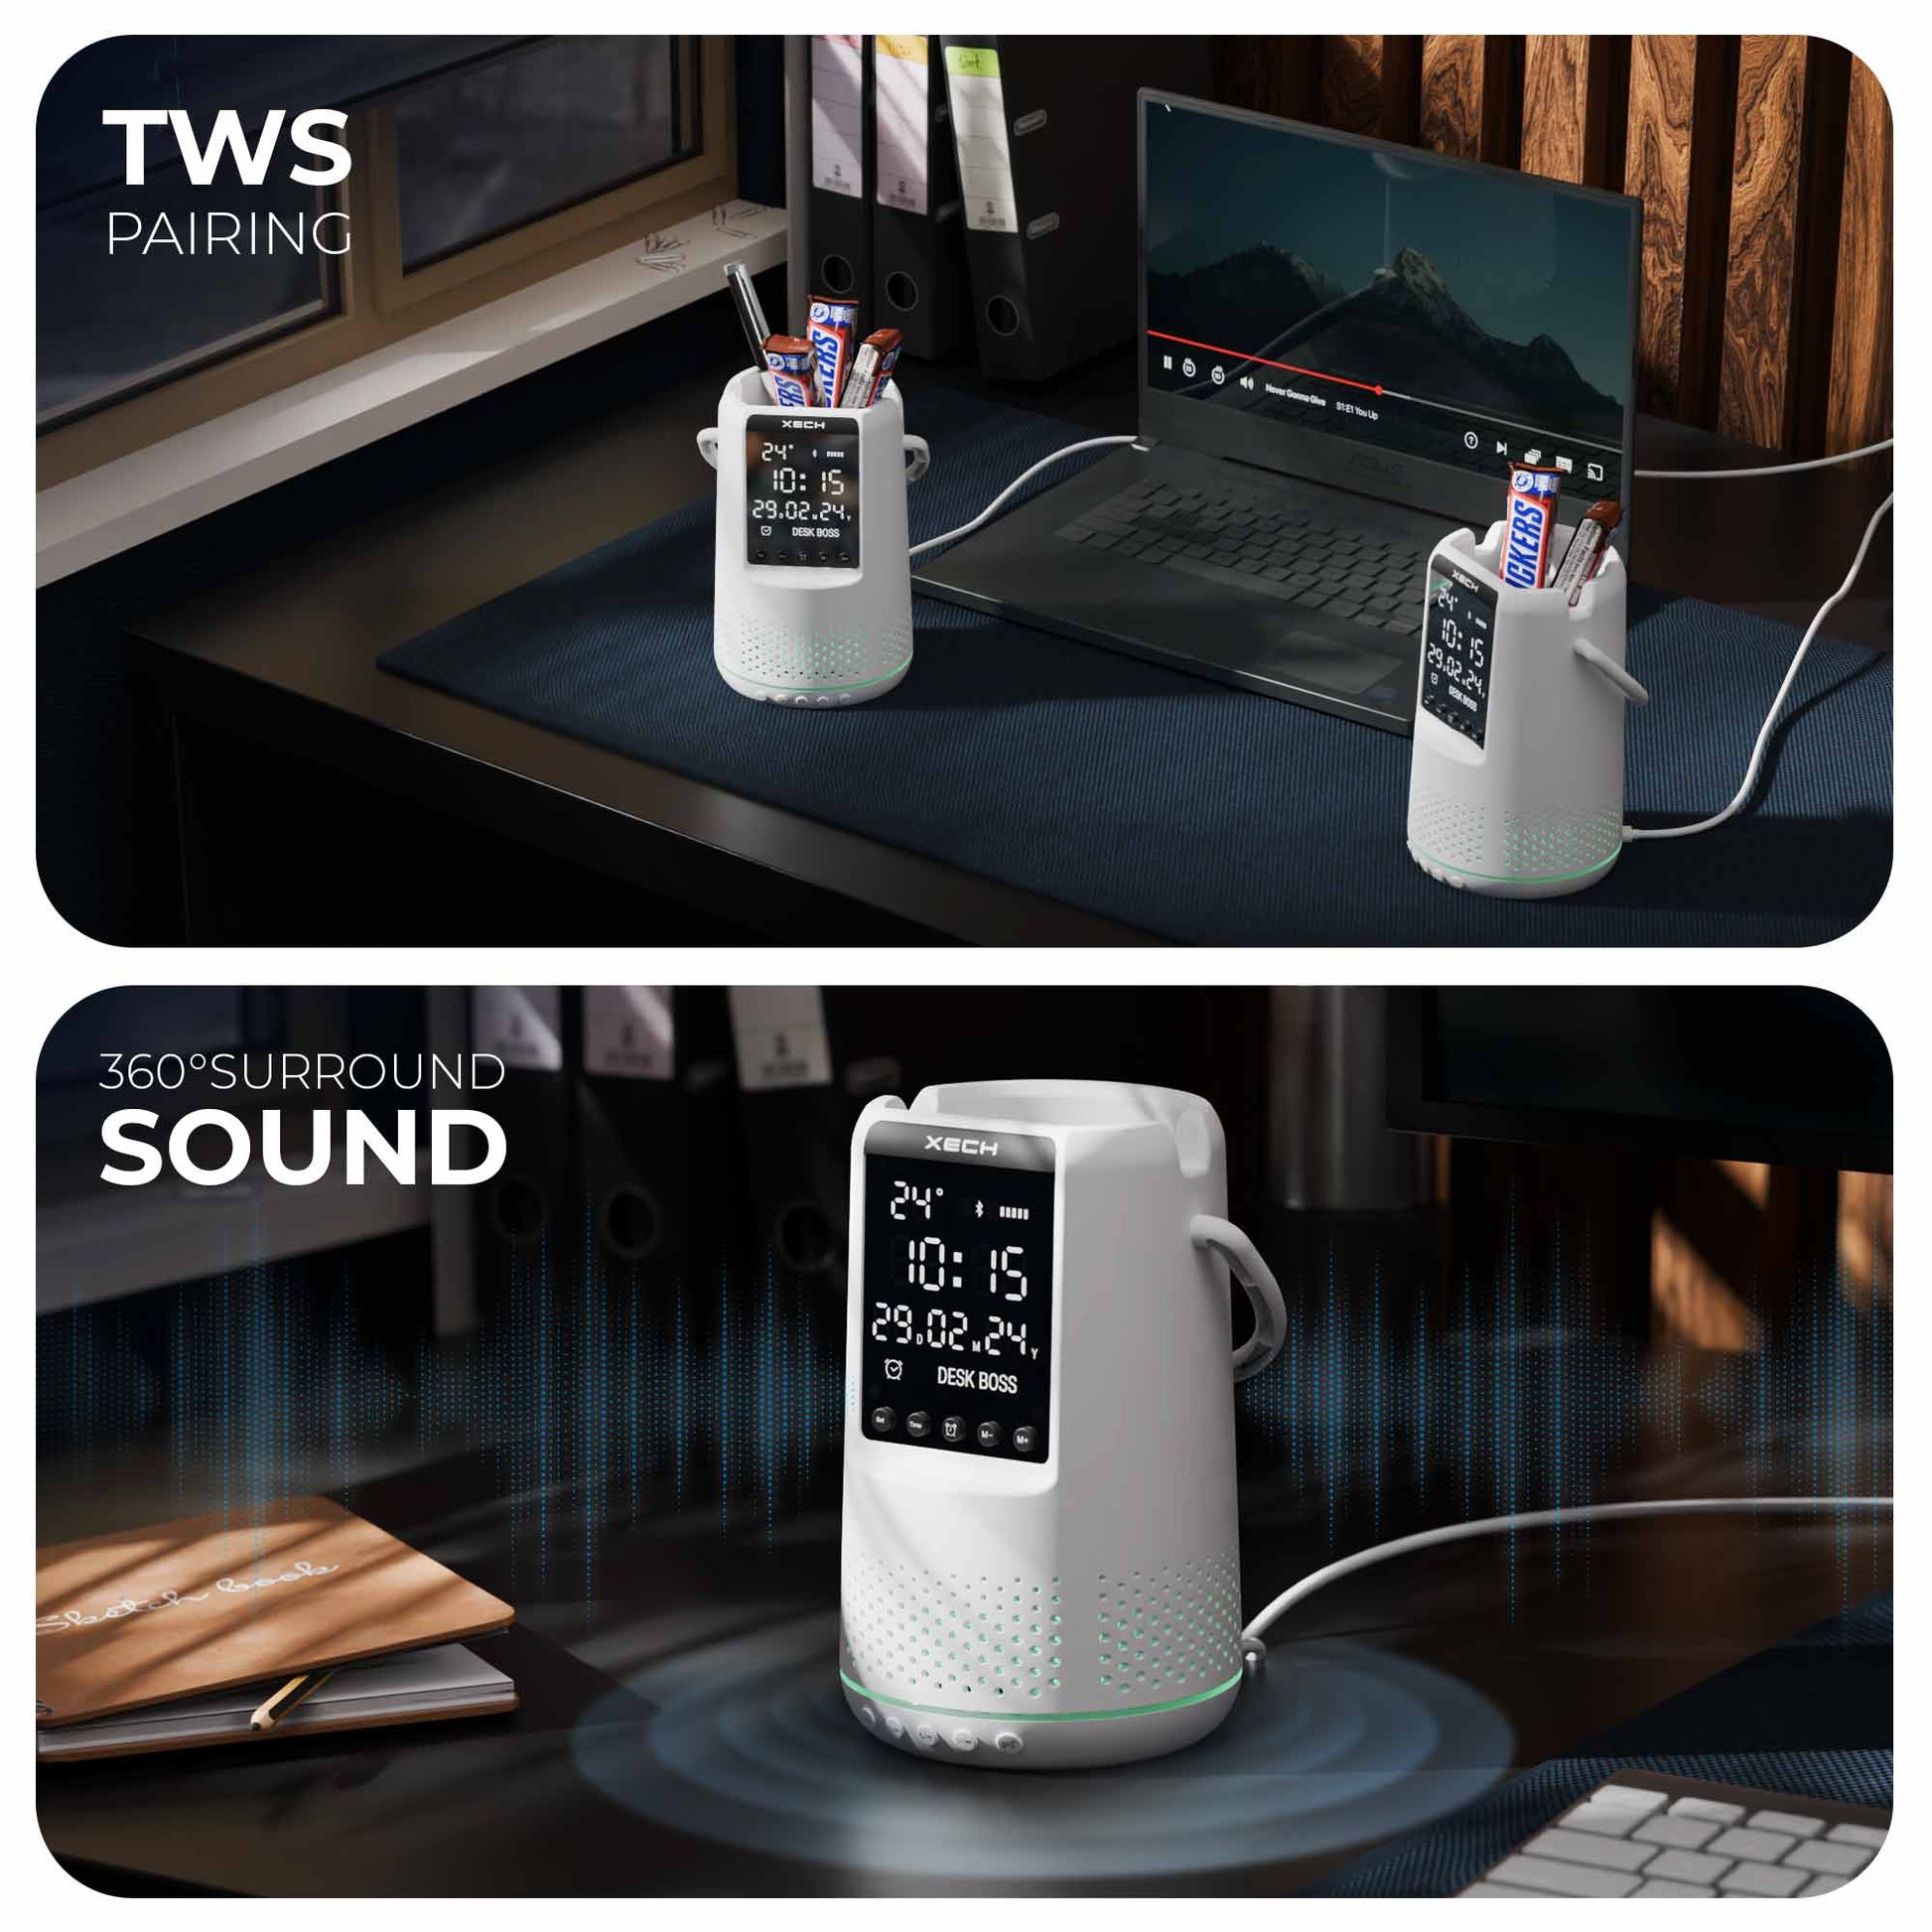 XECH deskboss bluetooth Speaker with clock TWS pairing